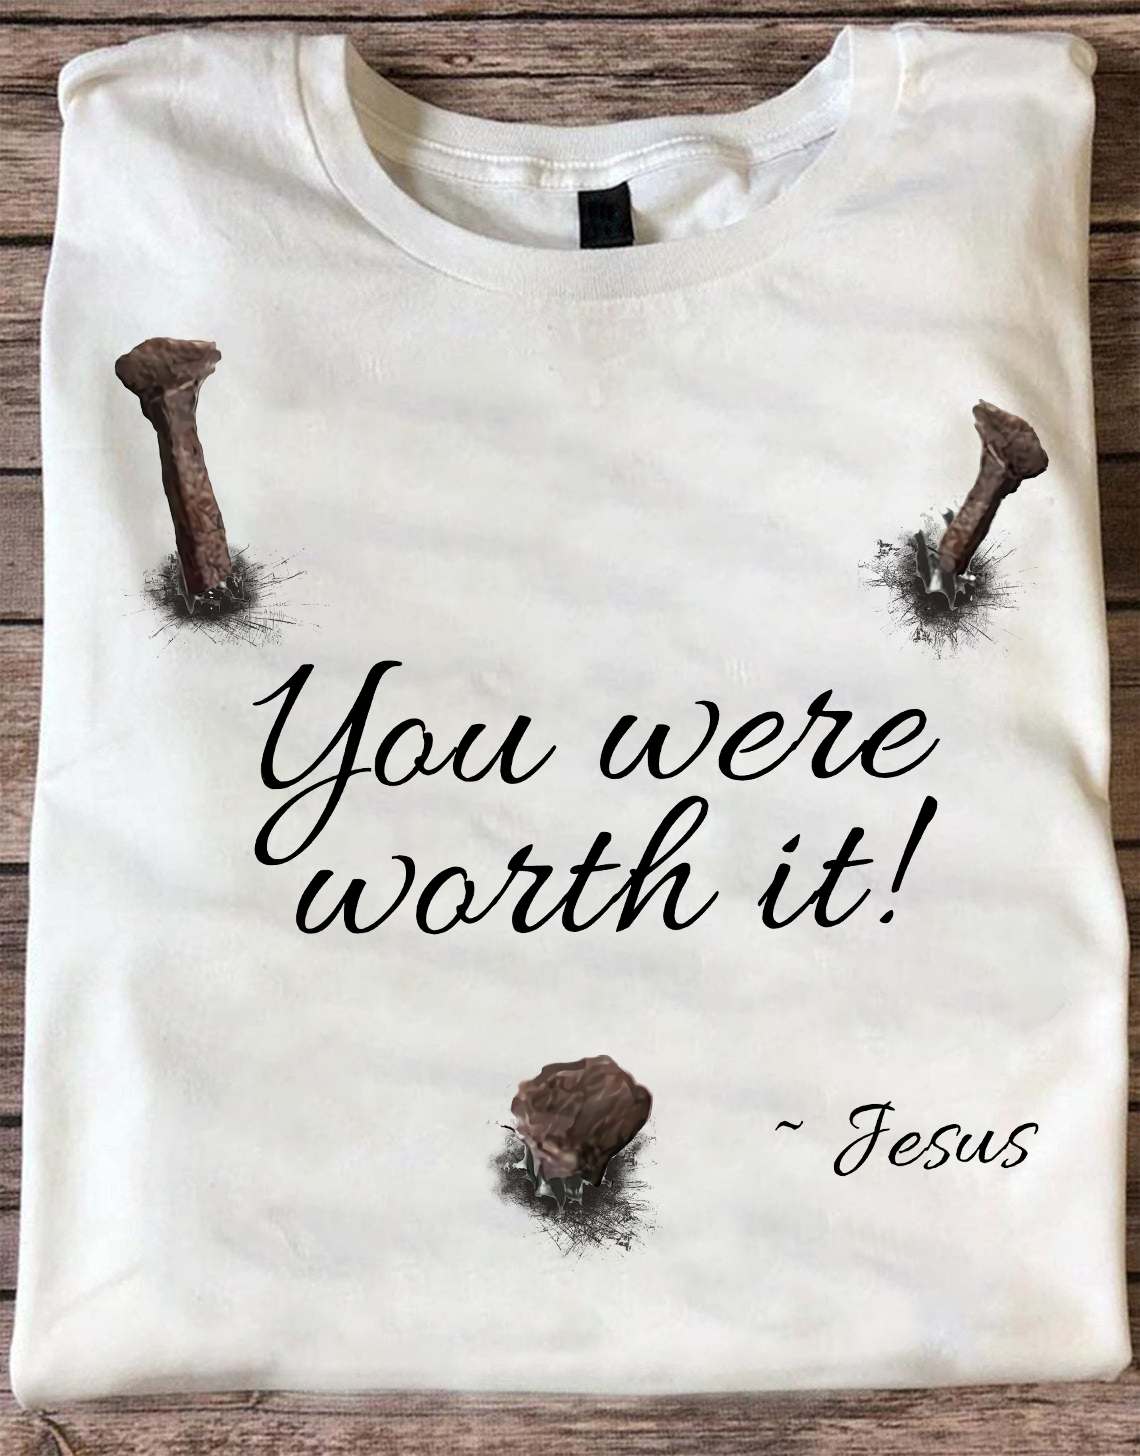 You were worth it - Jesus the god, Jesus saying